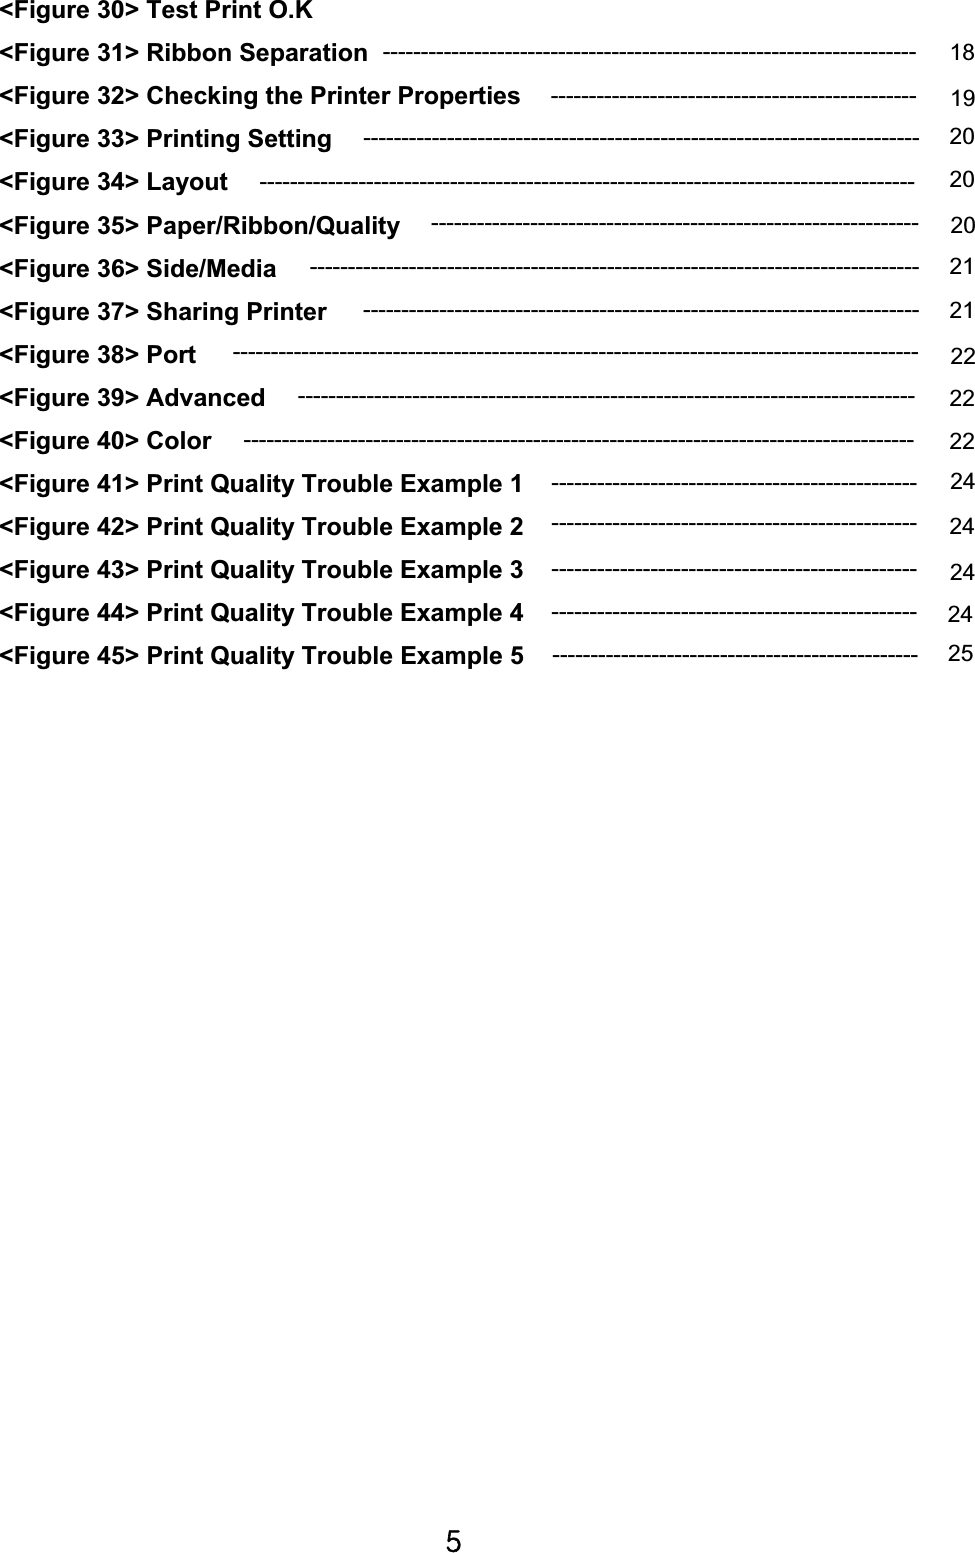 \G&lt;Figure 30&gt; Test Print O.K &lt;Figure 31&gt; Ribbon Separation   &lt;Figure 32&gt; Checking the Printer Properties &lt;Figure 33&gt; Printing Setting &lt;Figure 34&gt; Layout   &lt;Figure 35&gt; Paper/Ribbon/Quality    &lt;Figure 36&gt; Side/Media &lt;Figure 37&gt; Sharing Printer   &lt;Figure 38&gt; Port       &lt;Figure 39&gt; Advanced &lt;Figure 40&gt; Color   &lt;Figure 41&gt; Print Quality Trouble Example 1 &lt;Figure 42&gt; Print Quality Trouble Example 2   &lt;Figure 43&gt; Print Quality Trouble Example 3       &lt;Figure 44&gt; Print Quality Trouble Example 4 &lt;Figure 45&gt; Print Quality Trouble Example 5----------------------------------------------------------------------  18-------------------------------------------------------------------------  2020--------------------------------------------------------------------------------  21-------------------------------------------------------------------------  21----------------------------------------------------------------  20------------------------------------------------  19---------------------------------------------------------------------------------  22222424------------------------------------------------  24------------------------------------------------  252422------------------------------------------------ ------------------------------------------------ ------------------------------------------------ ---------------------------------------------------------------------------------------- ------------------------------------------------------------------------------------------ -------------------------------------------------------------------------------------- 